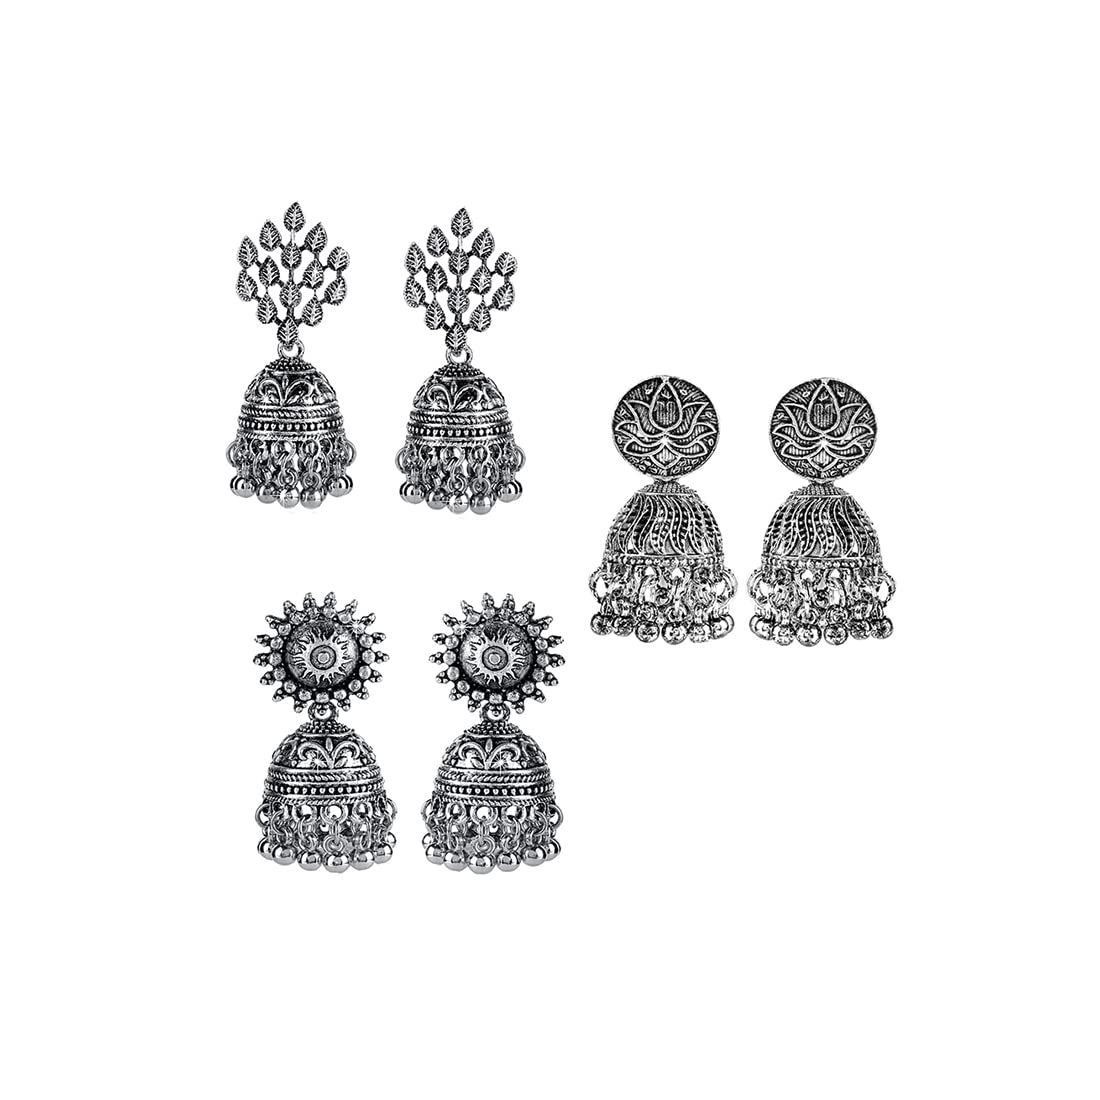 Kairangi Earrings for Women and Girls | Traditional Silver Oxidised Jhumka | German Silver Earring Set | Leaf Shaped Jhumki Earrings Combo | Birthday Gift For Girls and Women Anniversary Gift for Wife